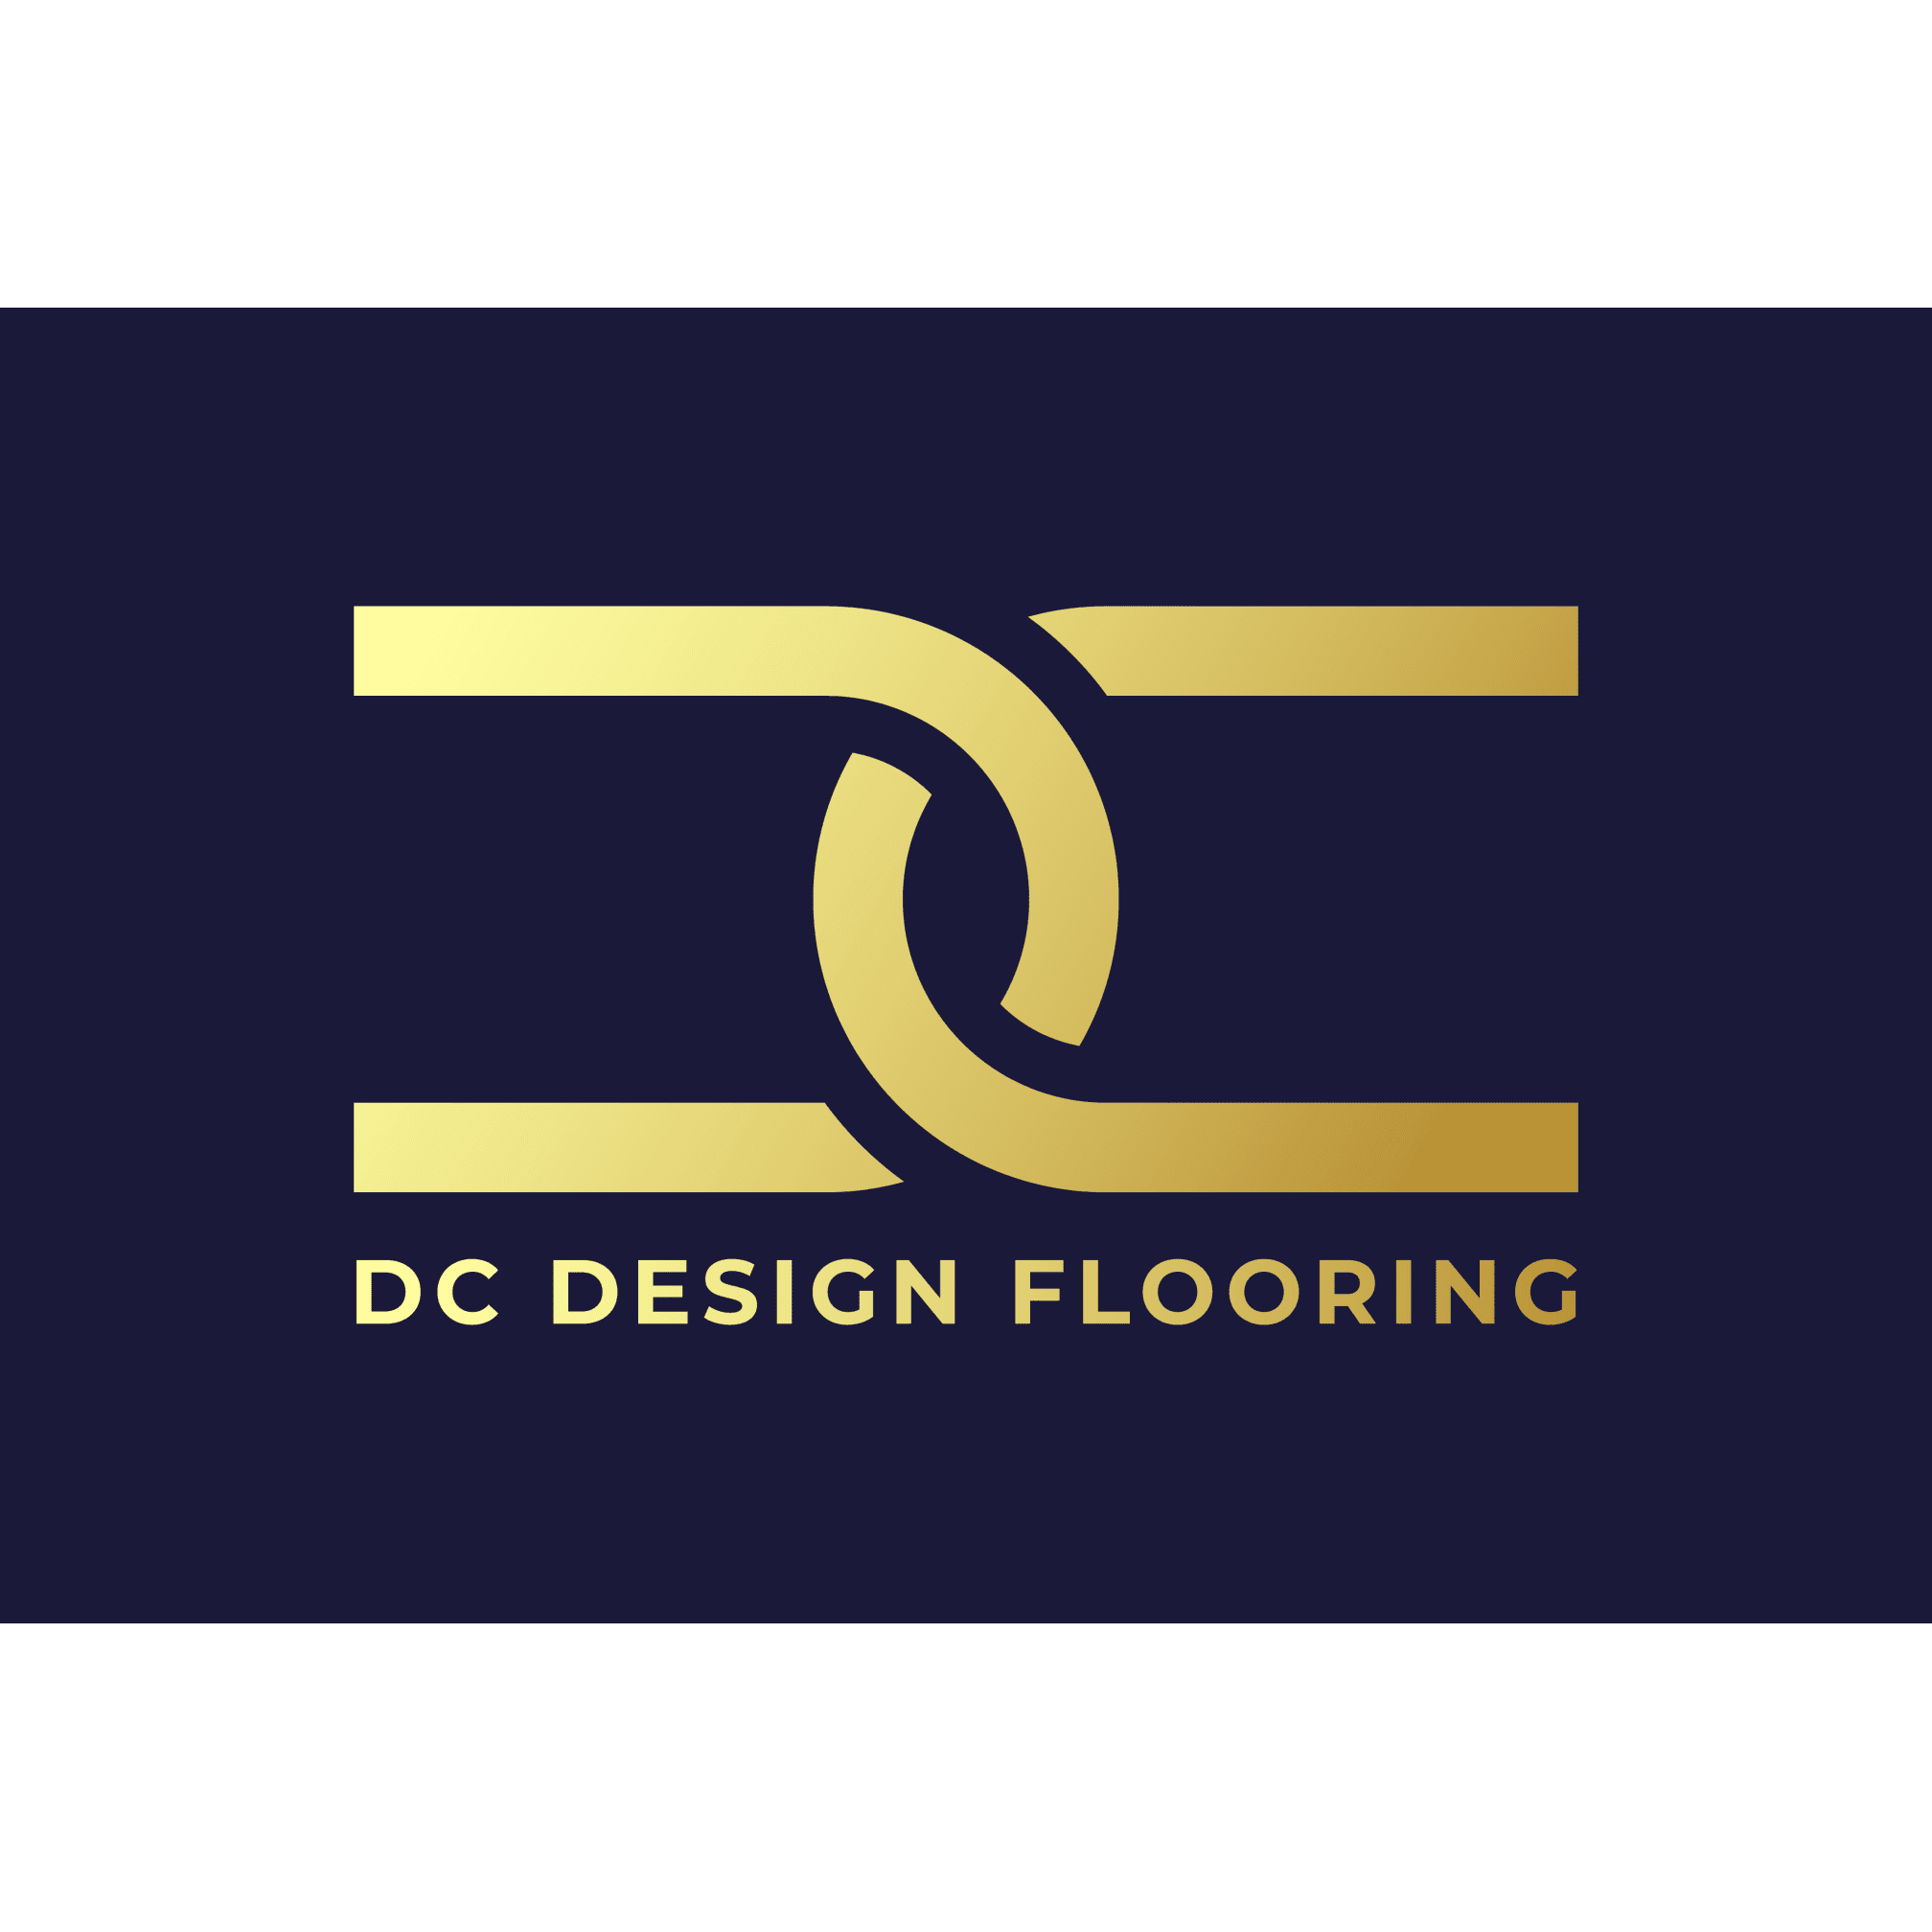 DC Design Flooring Ltd - Cirencester, Gloucestershire GL7 1HY - 01285 314299 | ShowMeLocal.com